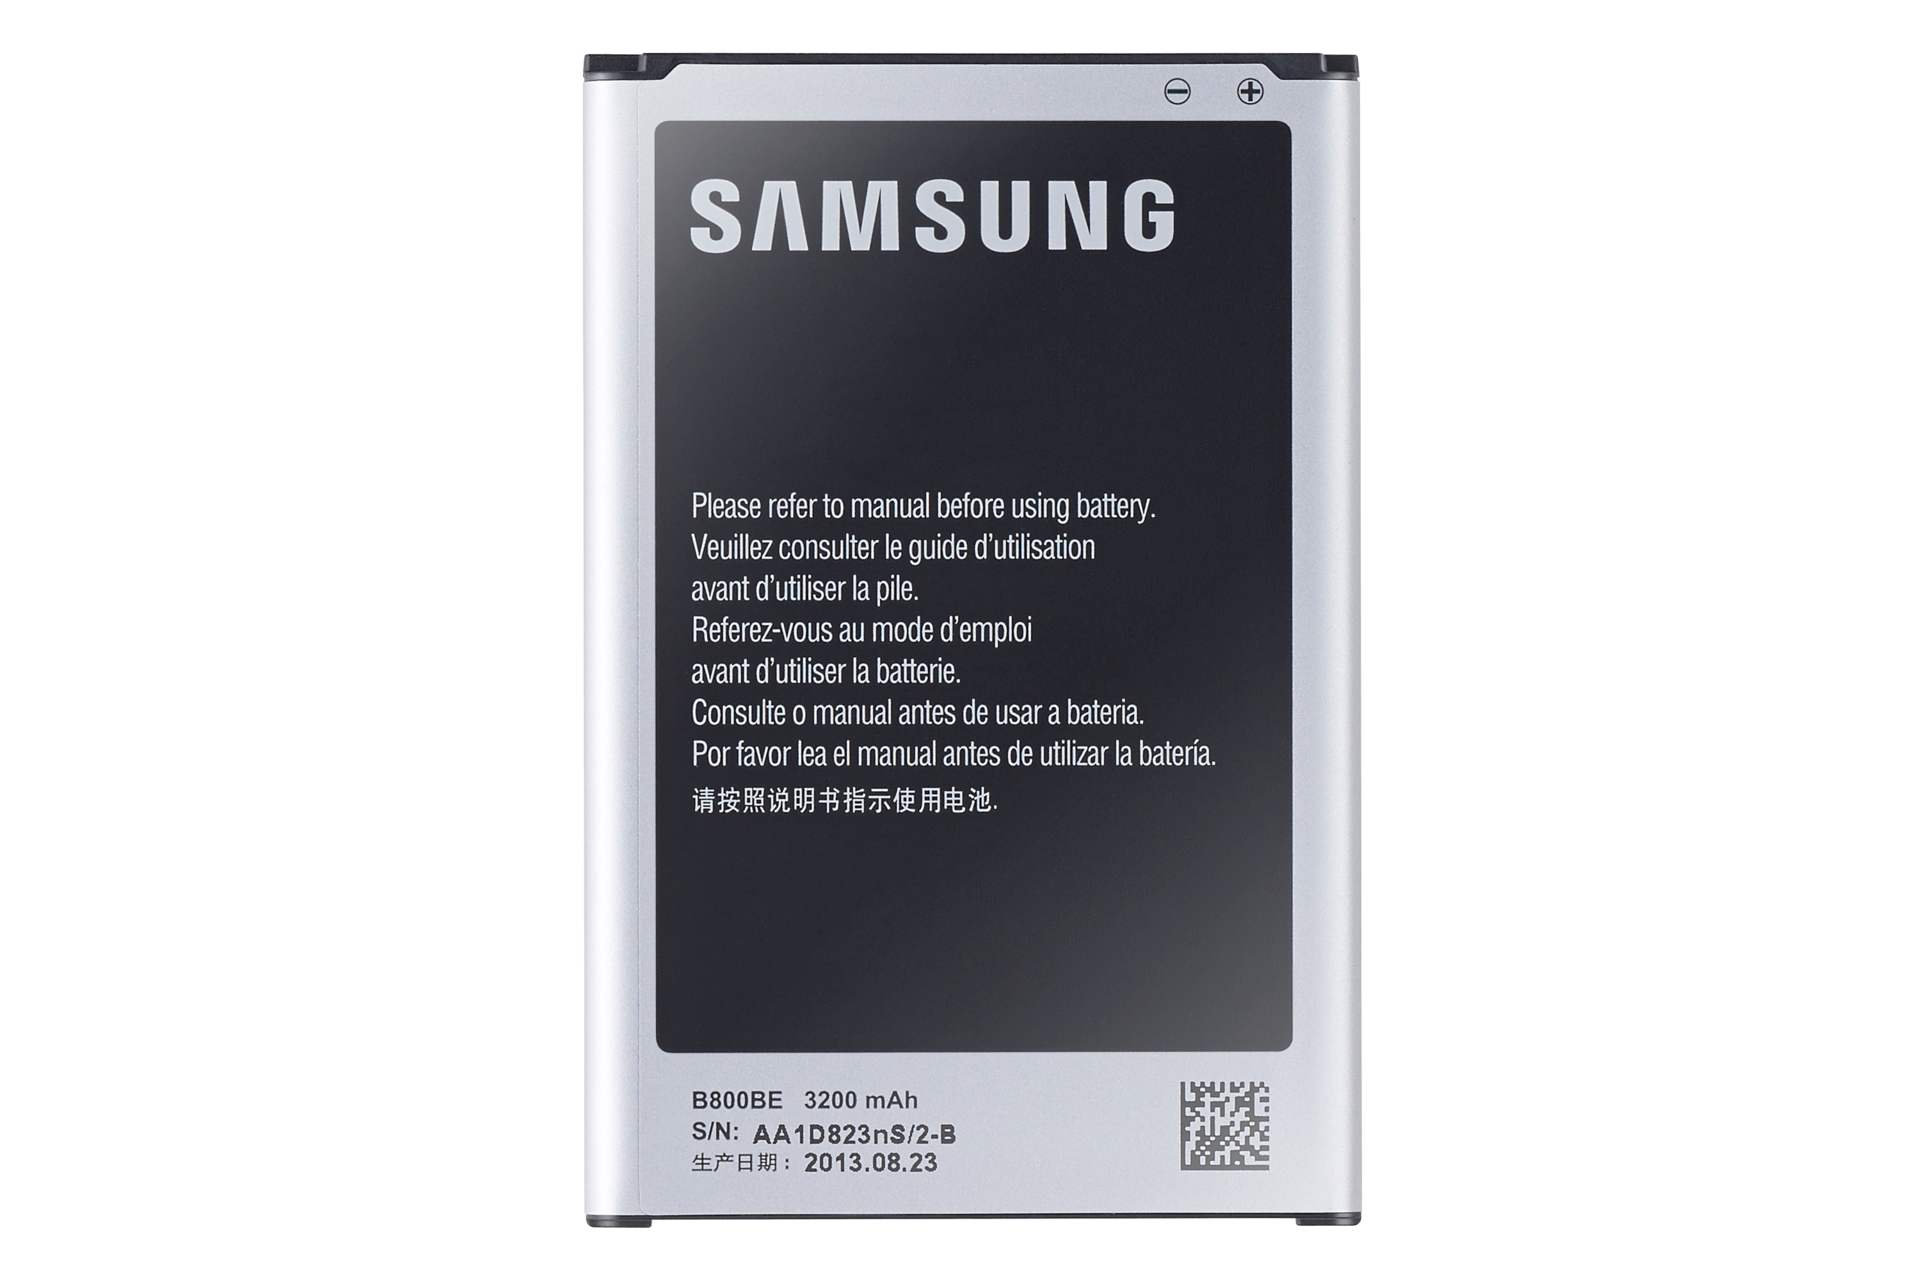 Galaxy Note 3 Battery - 3200mAh - Lithium-Ion - Samsung UK